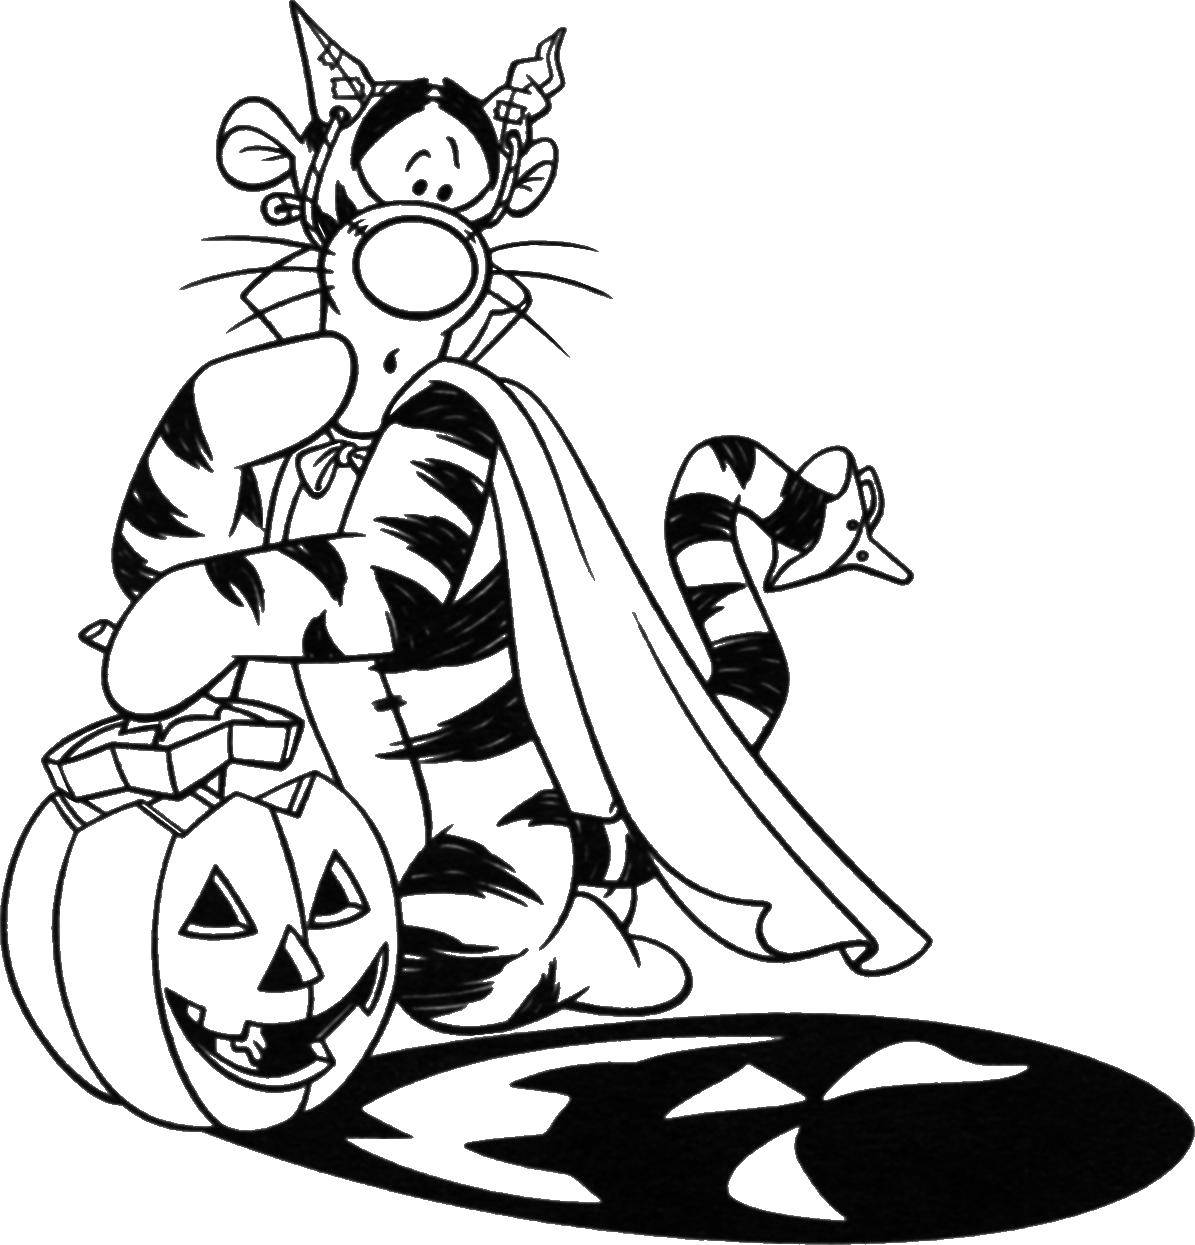 Coloring Tiger and pumpkin. Category pumpkin Halloween. Tags:  Halloween, pumpkin.